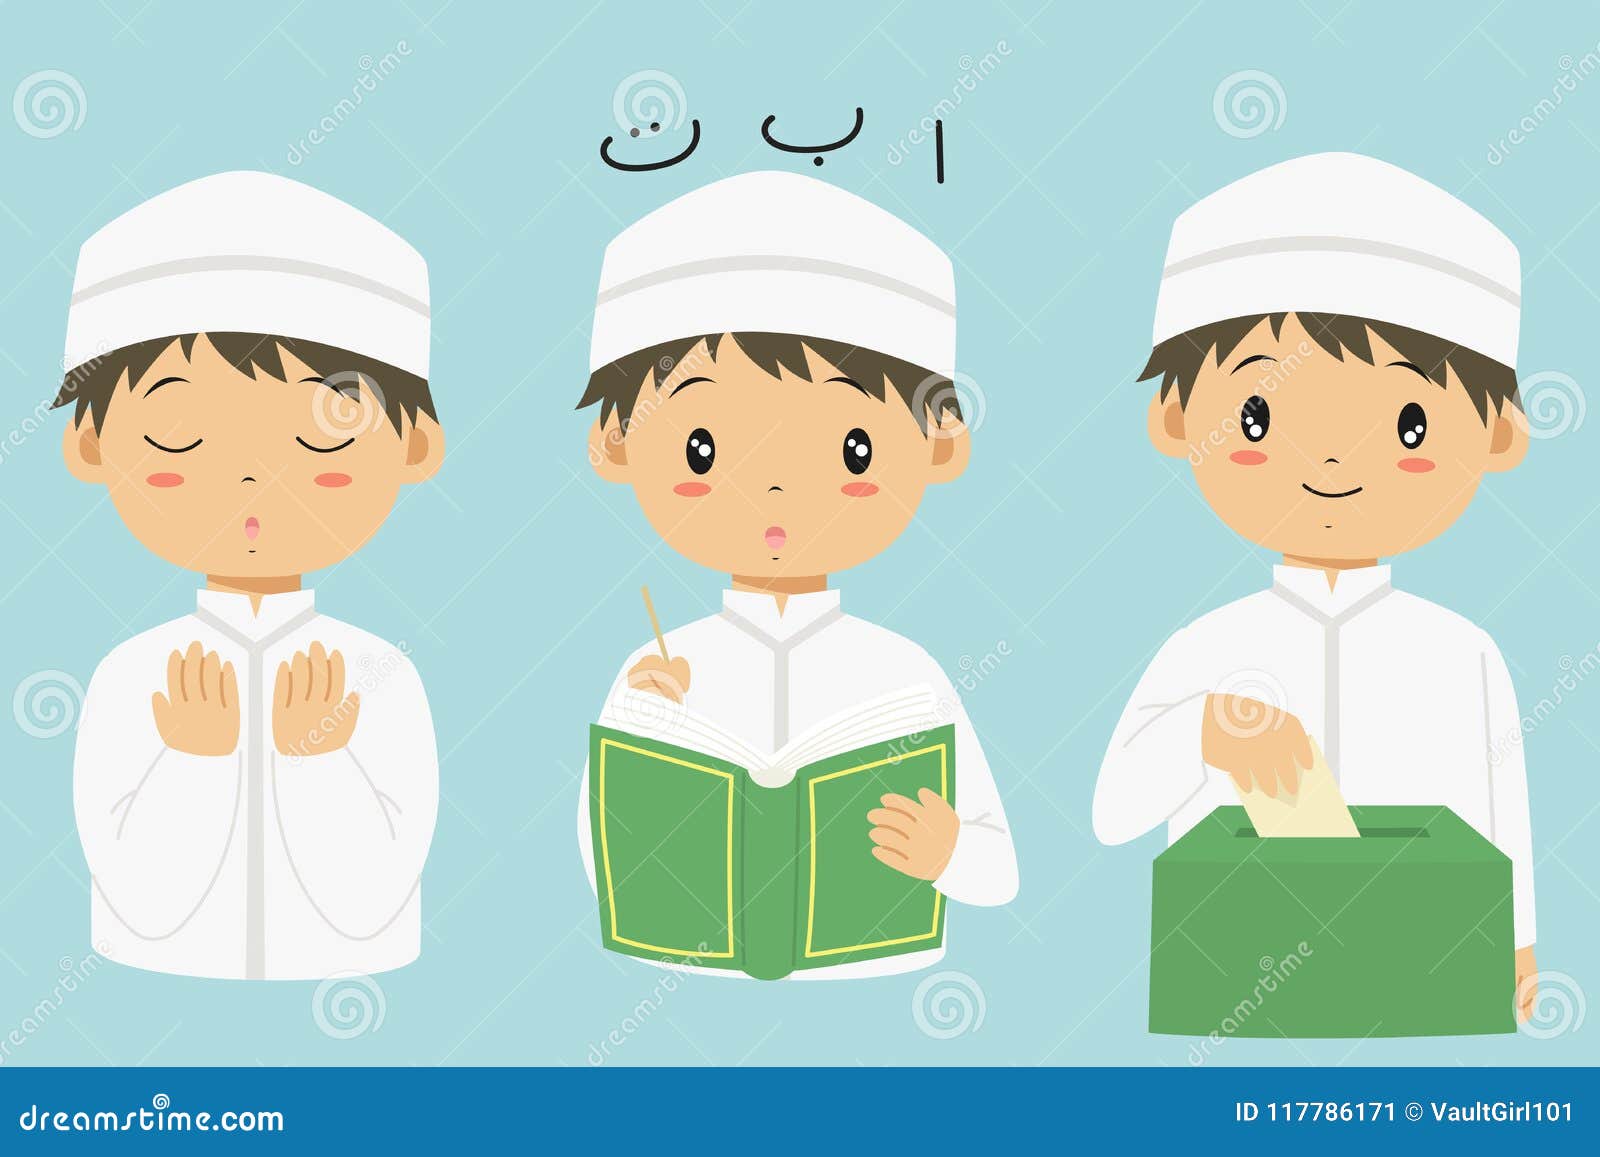 Muslim Boy Cartoon Vector Collection Stock Vector Illustration Of